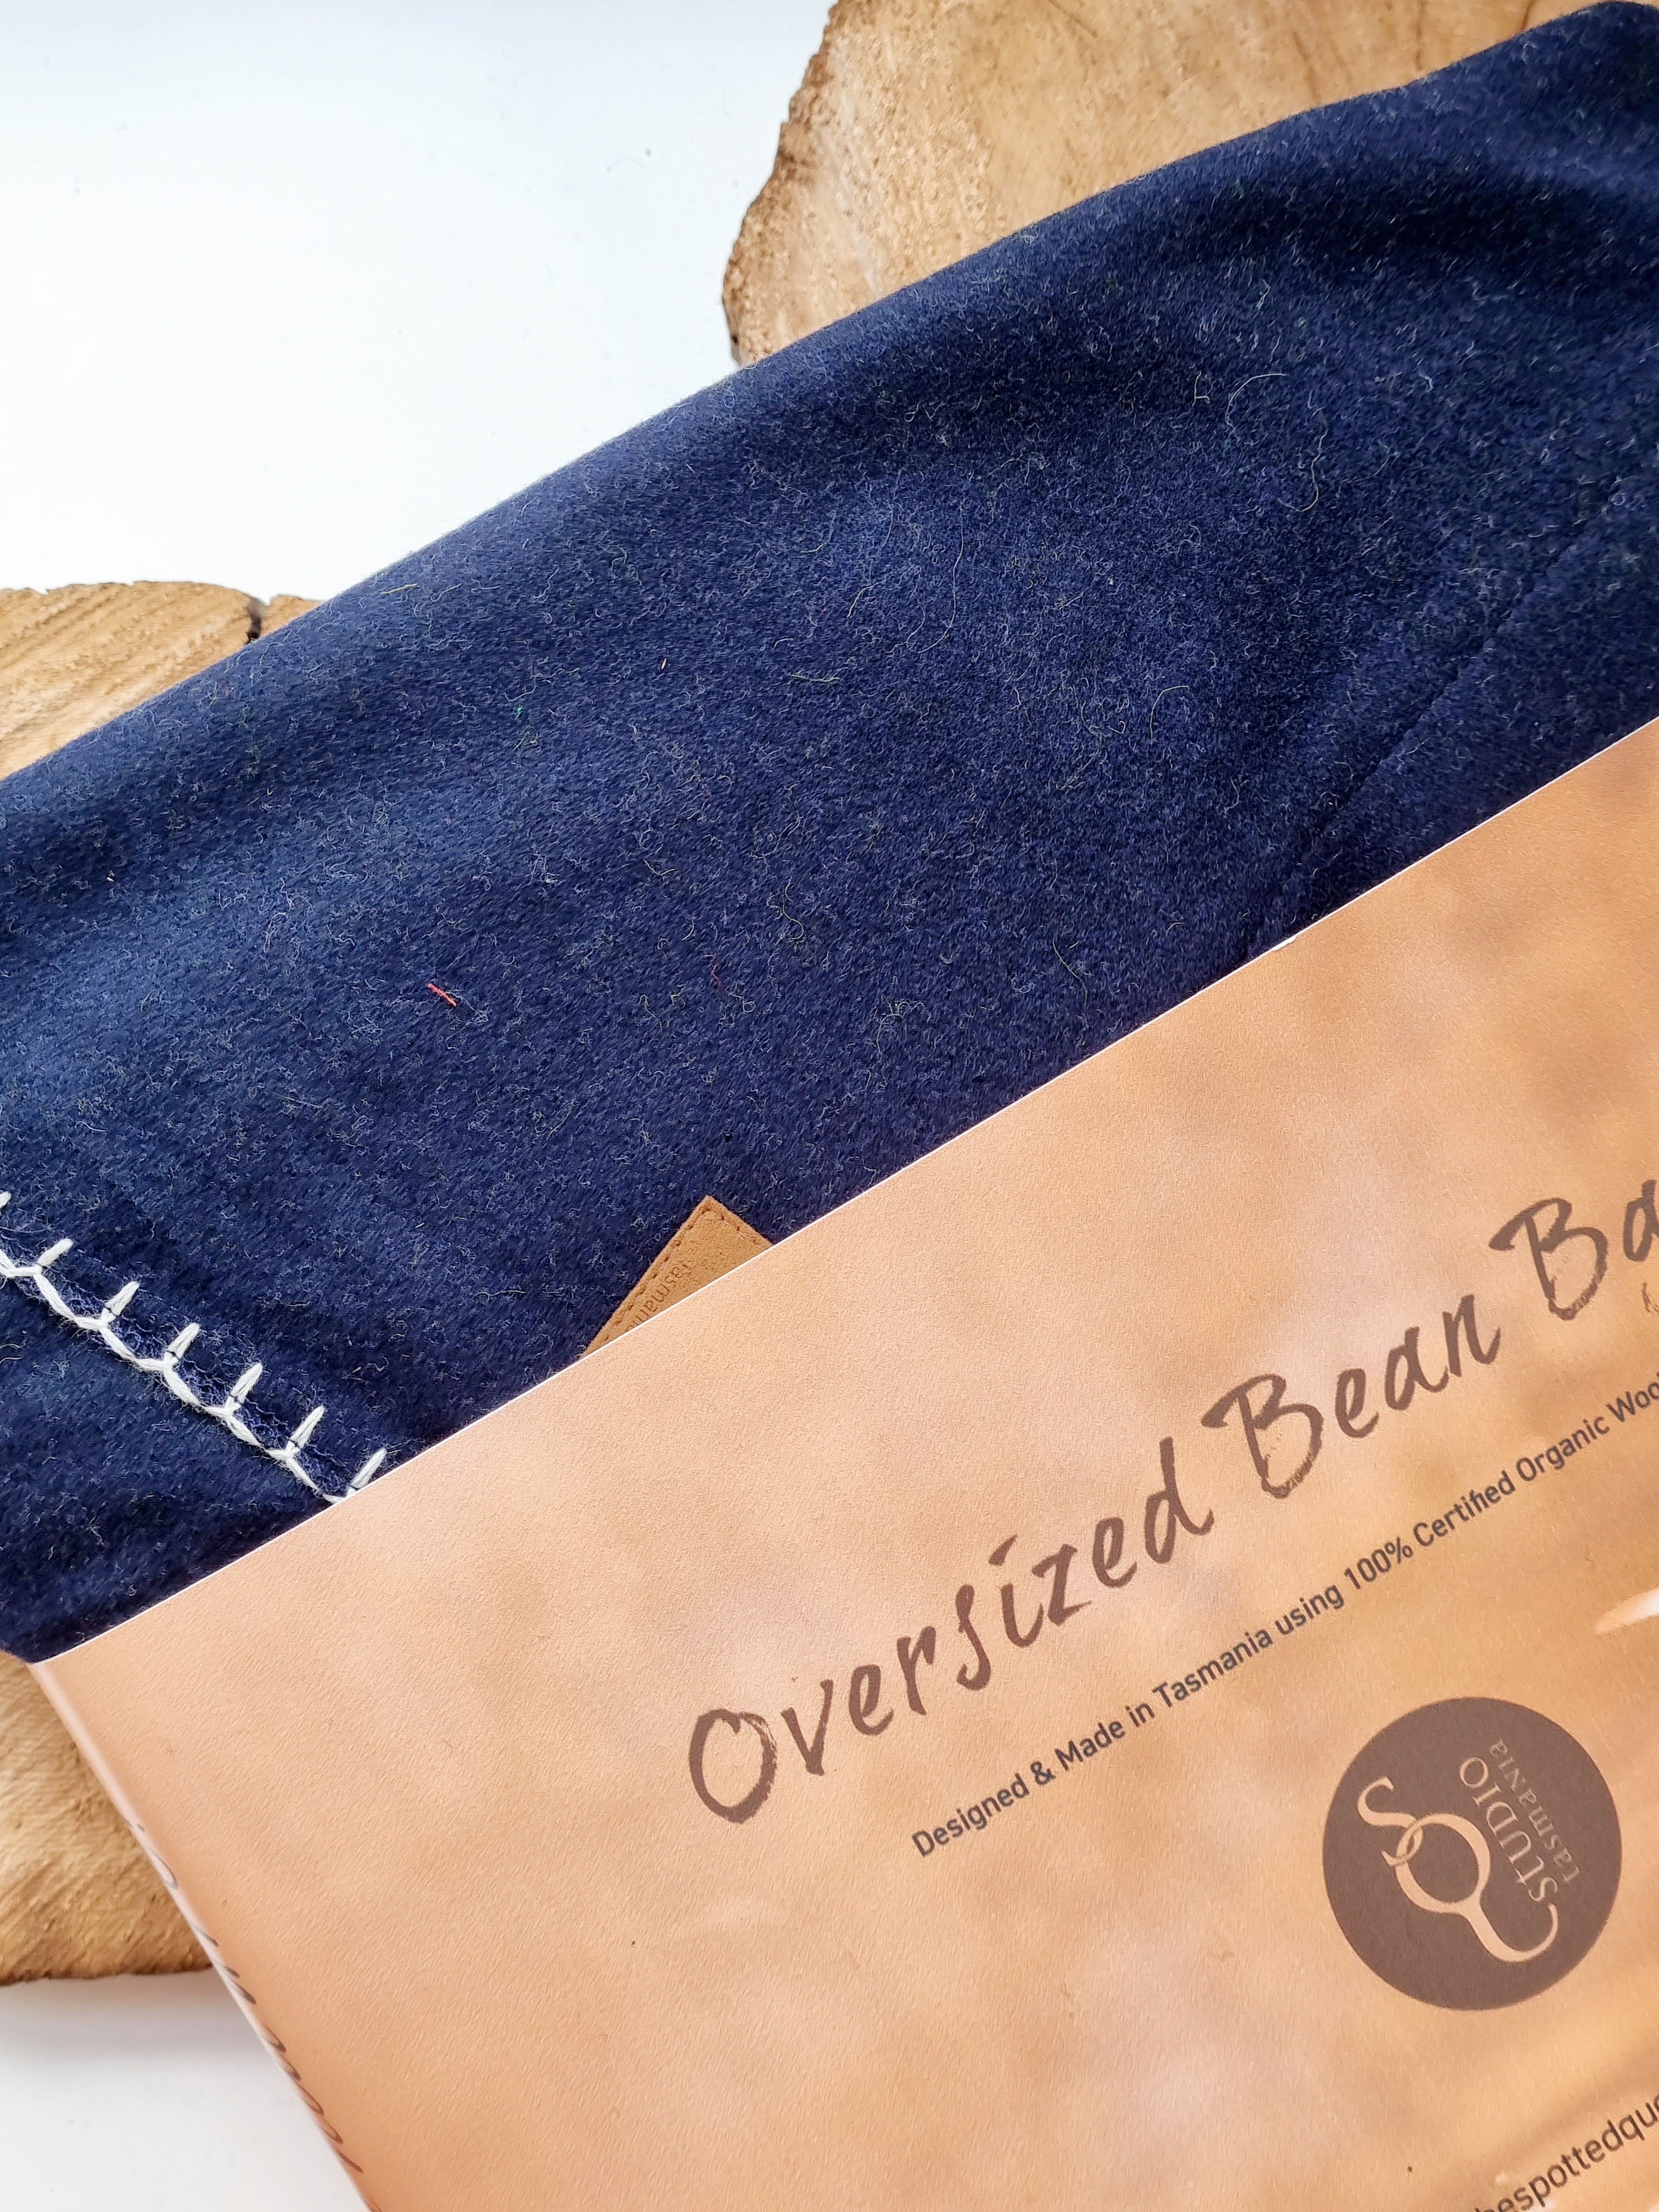 Organic Wool Felt Bean Chair Bean bags The Spotted Quoll Studio Indigo & Natural stitch 